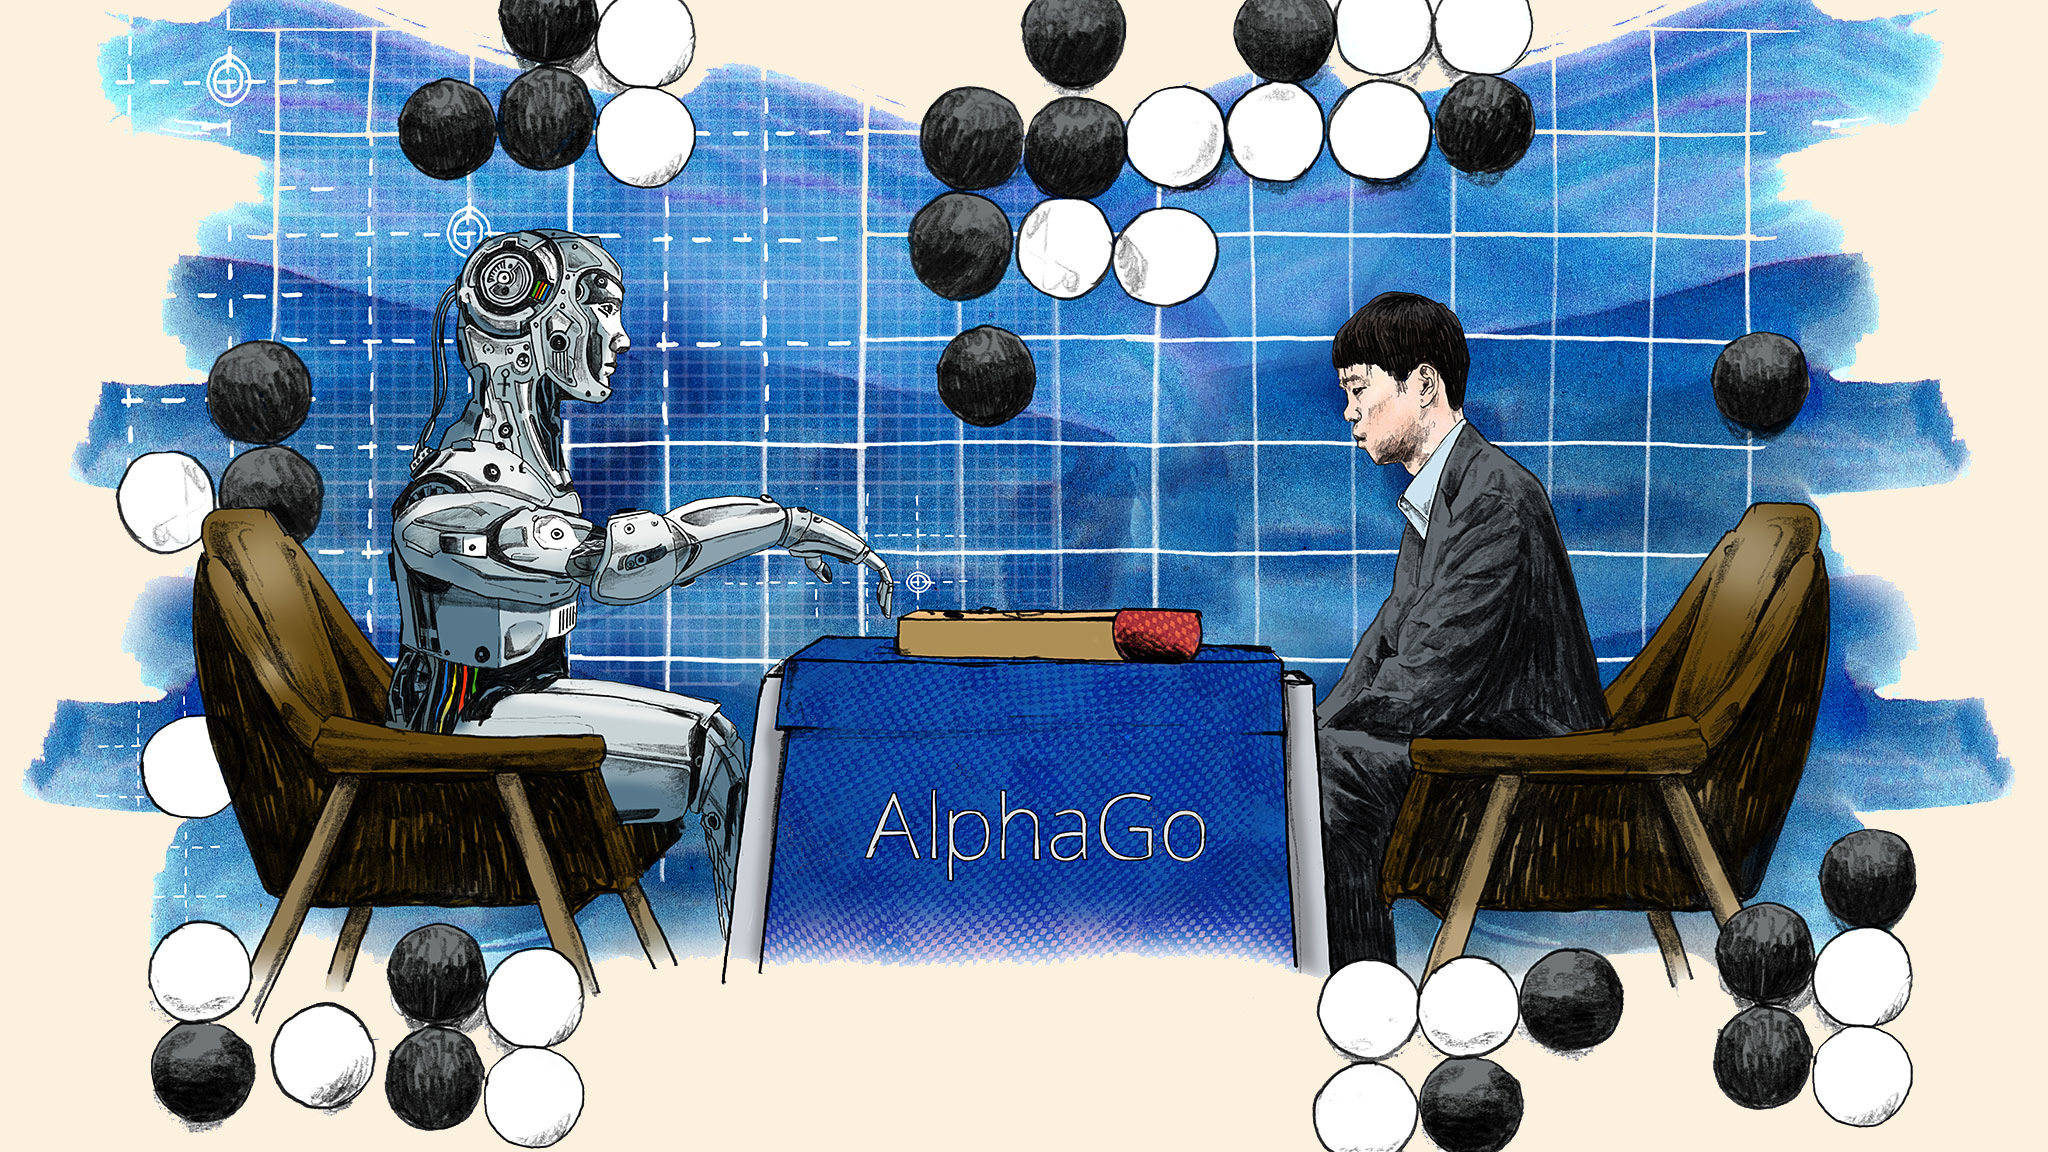 Artificial intelligence VS human